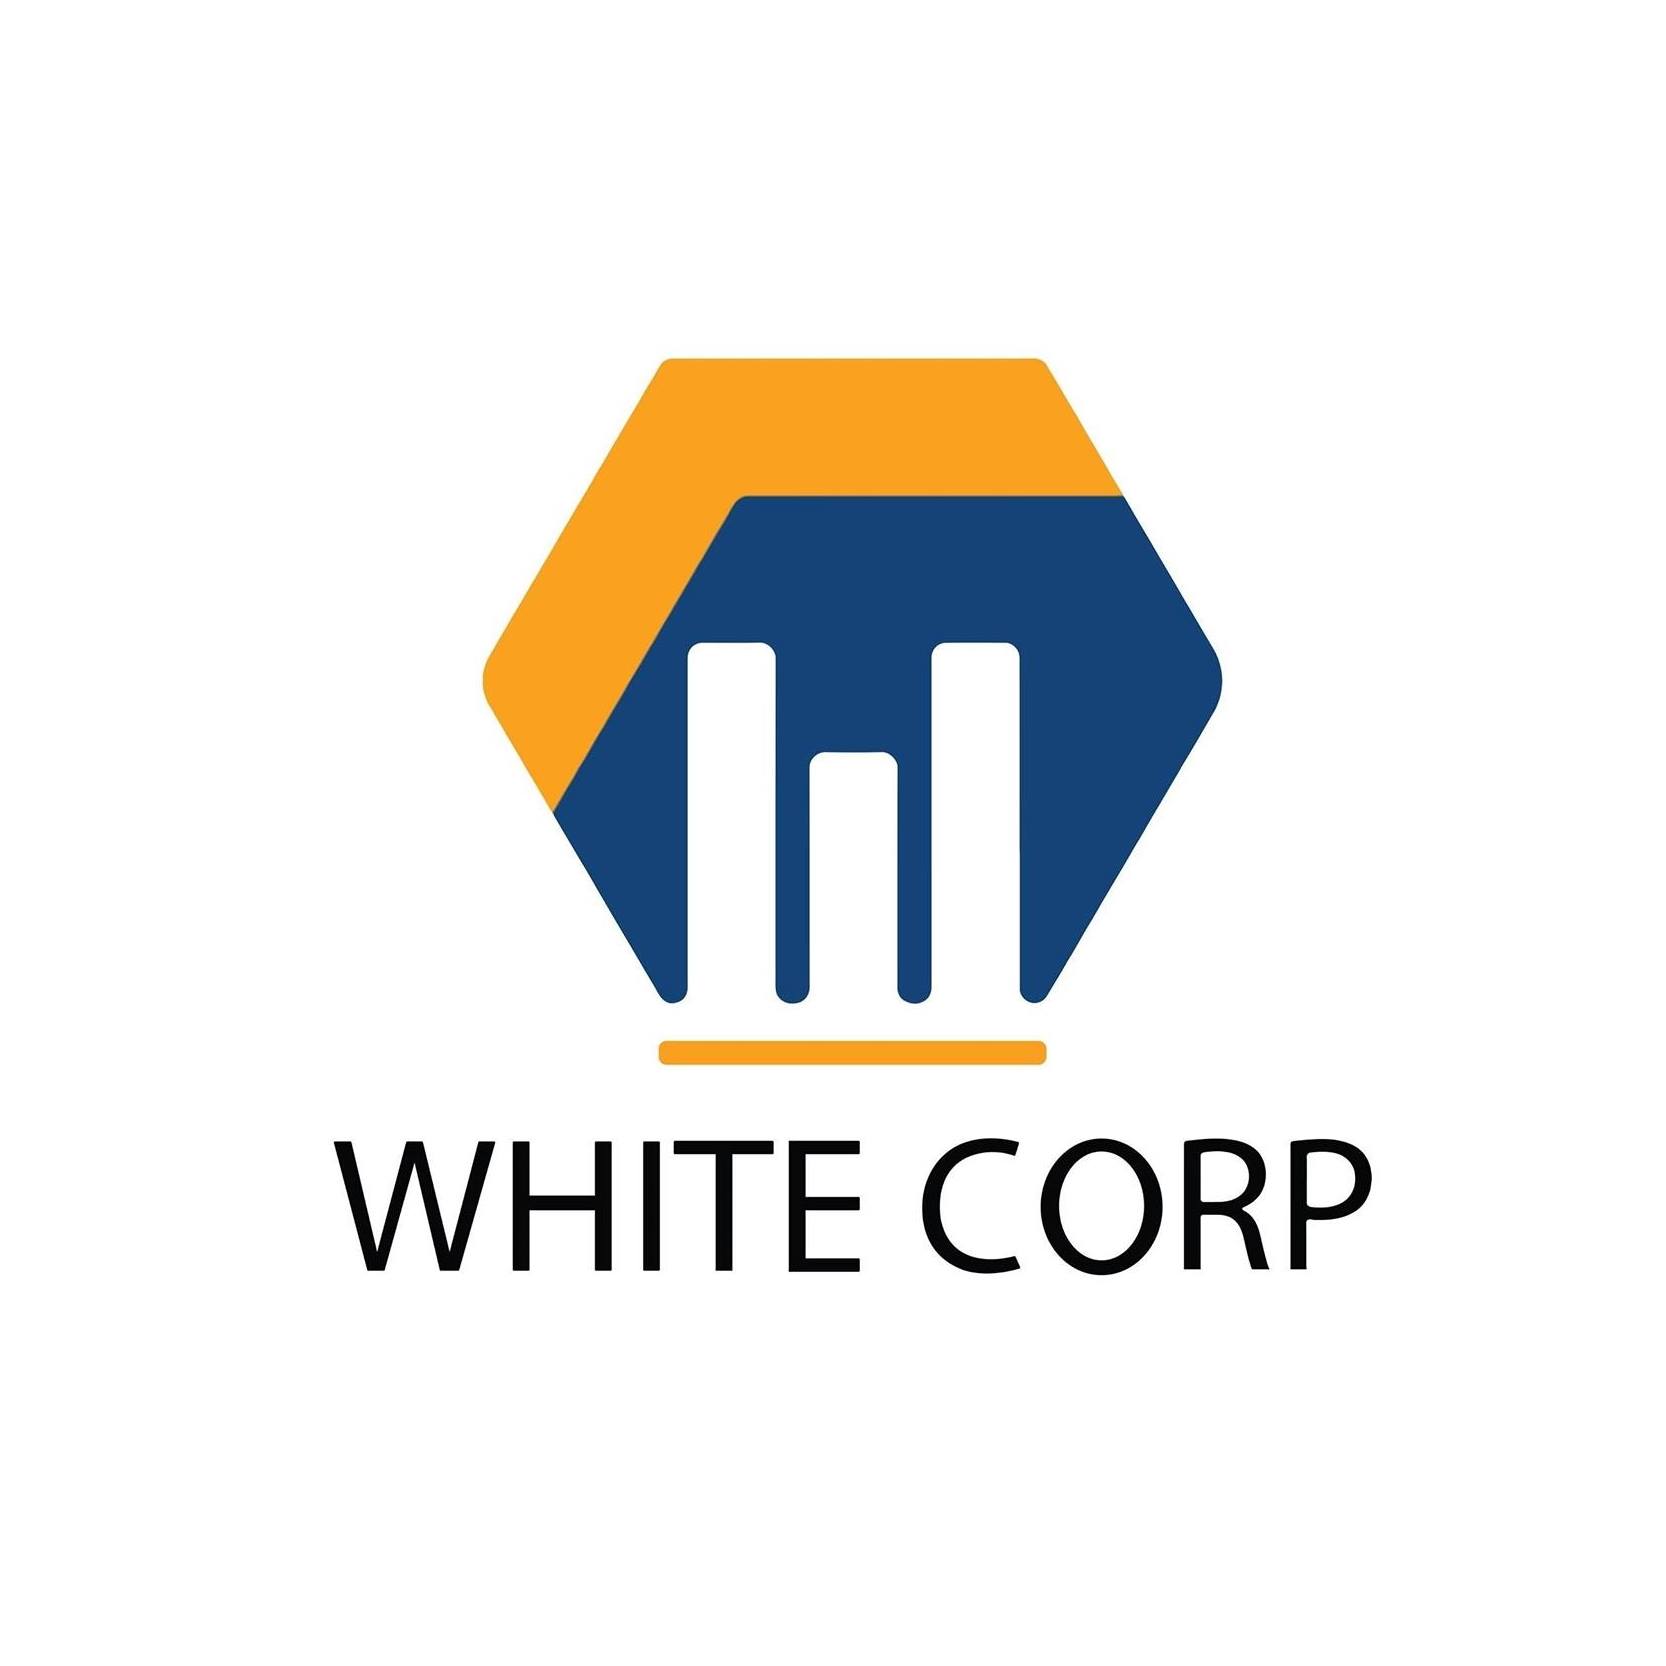 White Corp